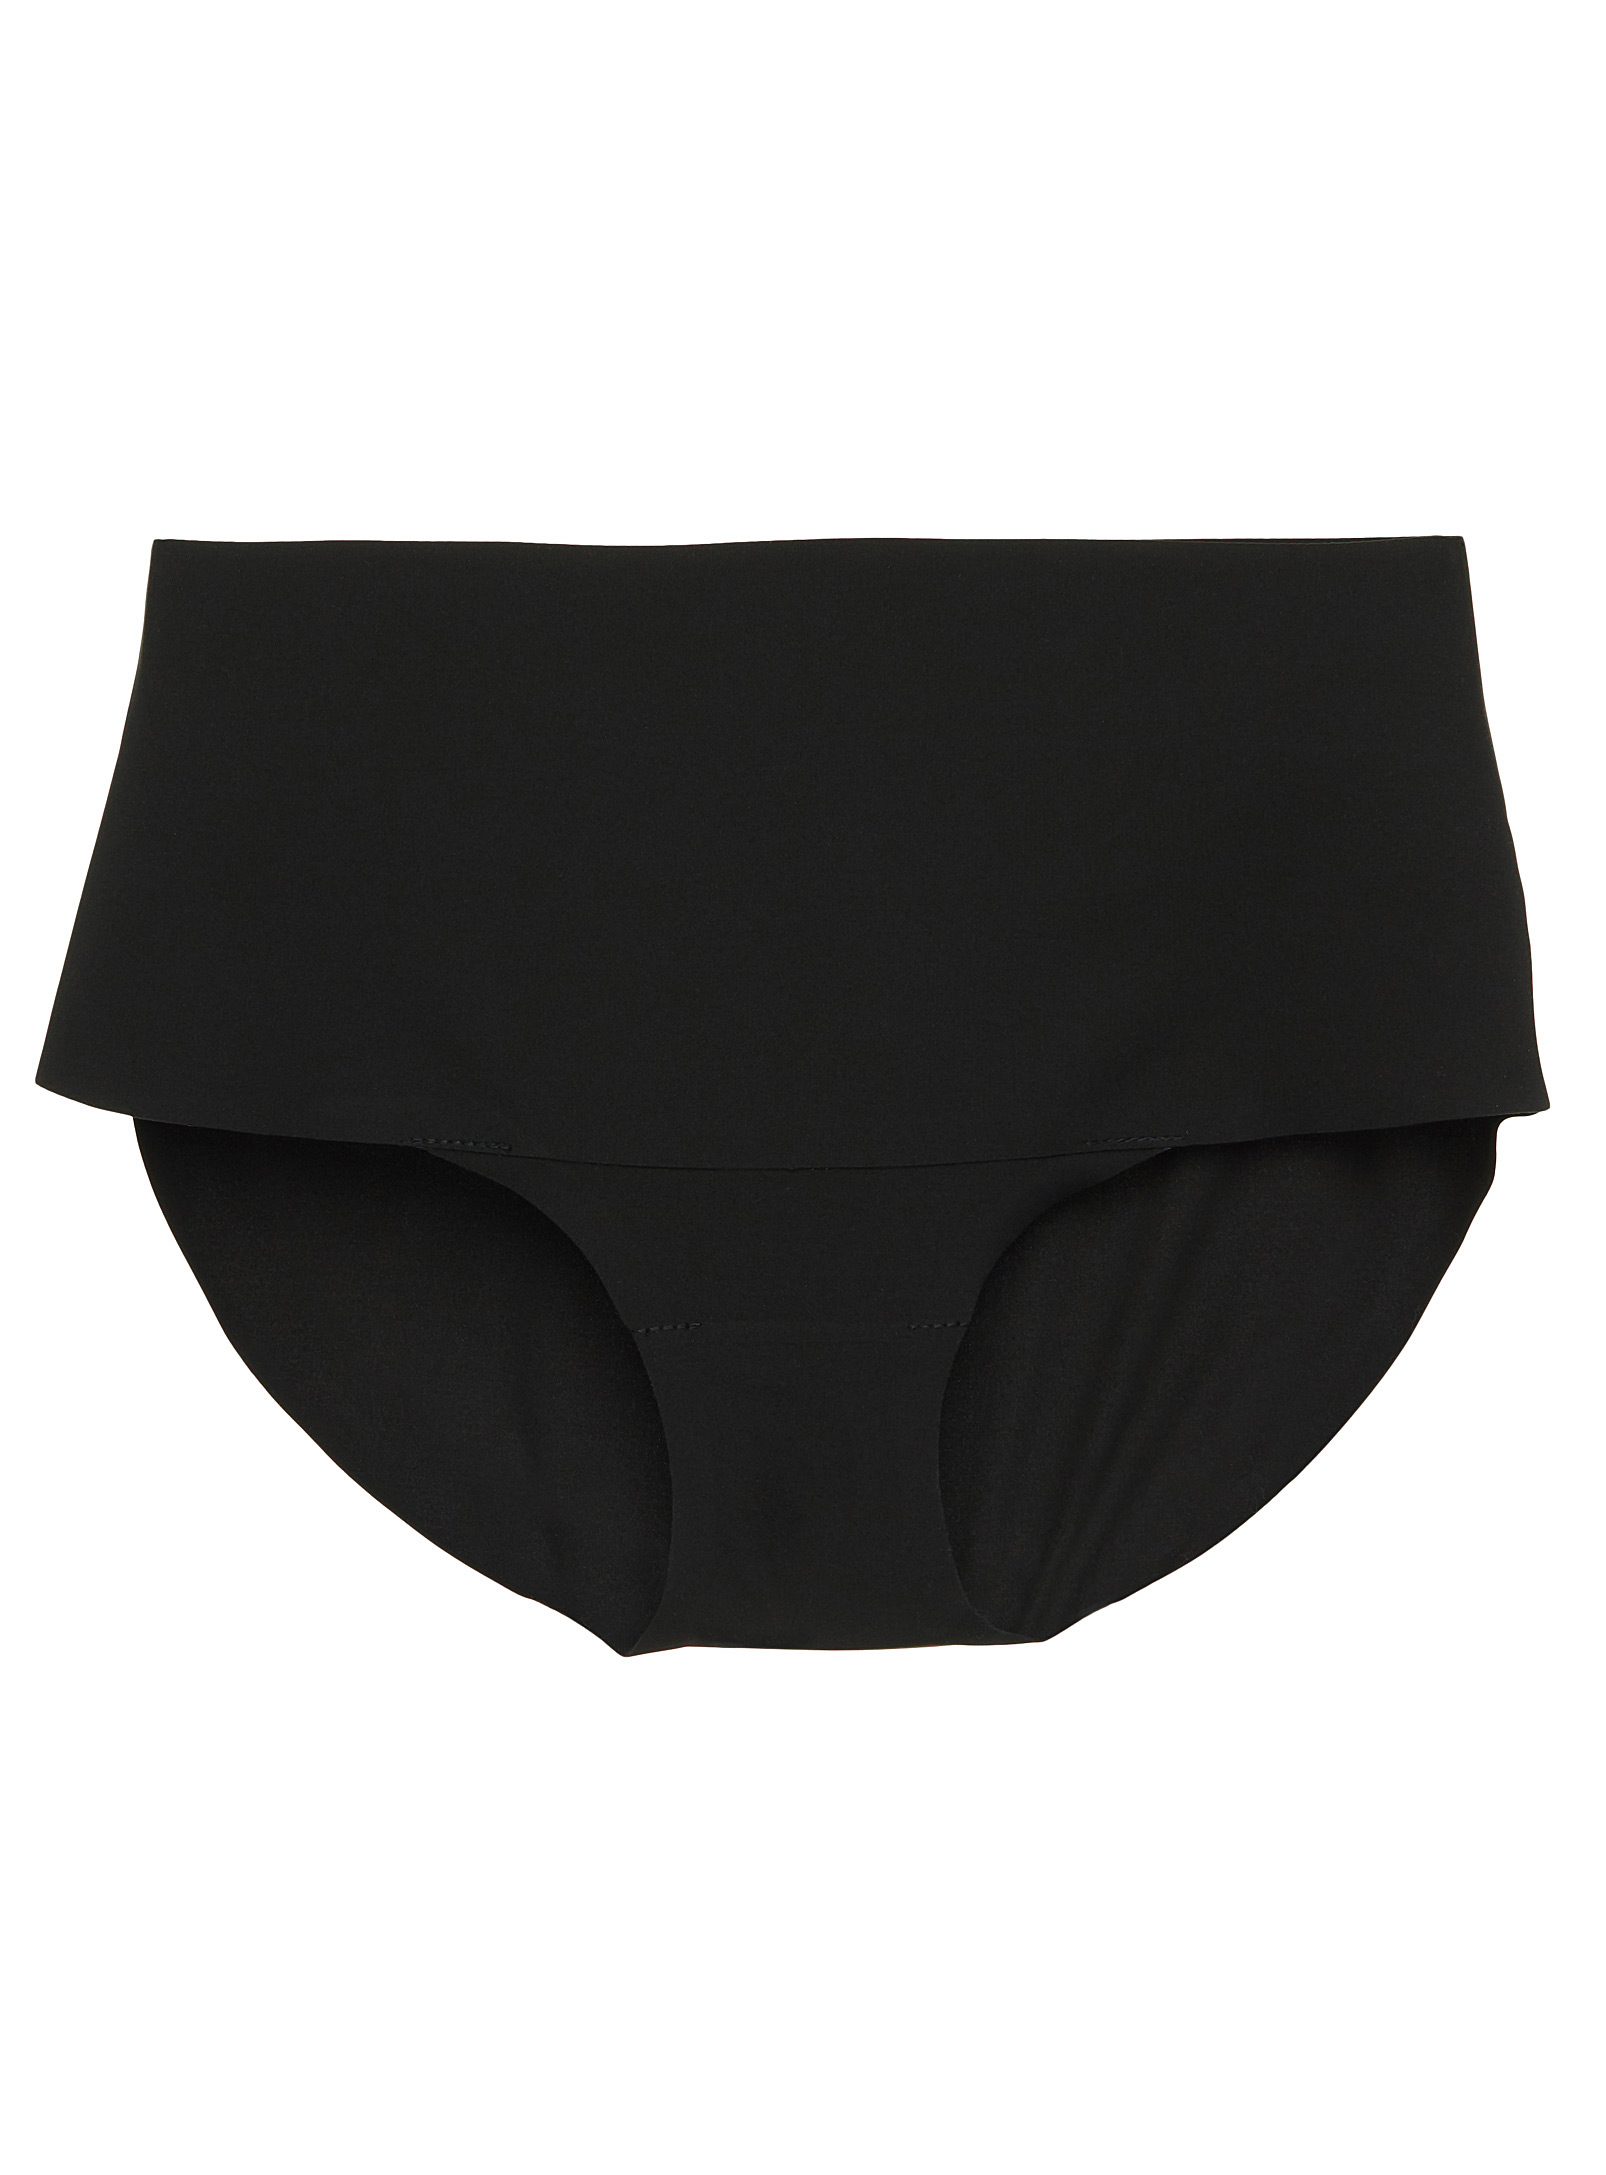 Spanx Undie-tectable Support Bikini Panty In Black